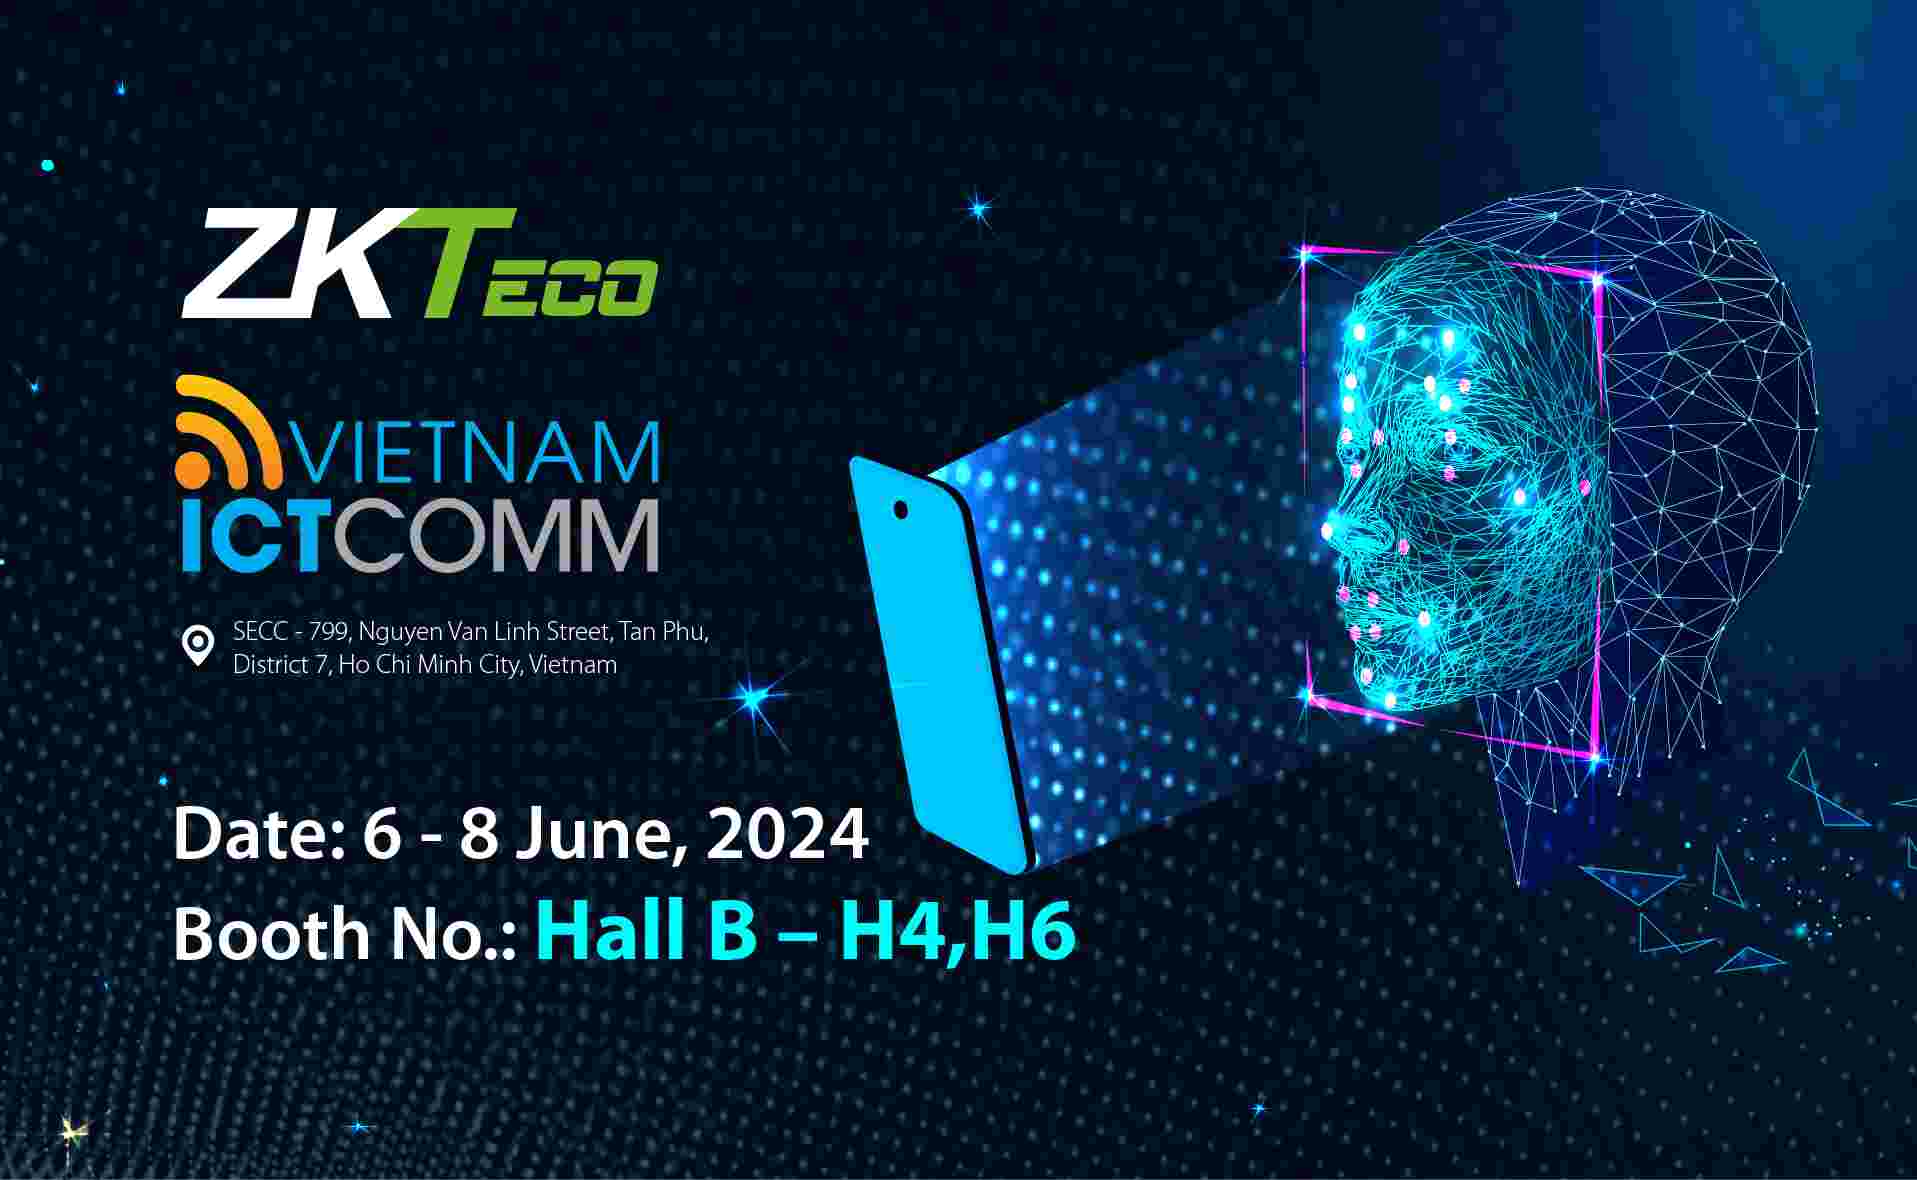 VIETNAM ICT COMM 2024